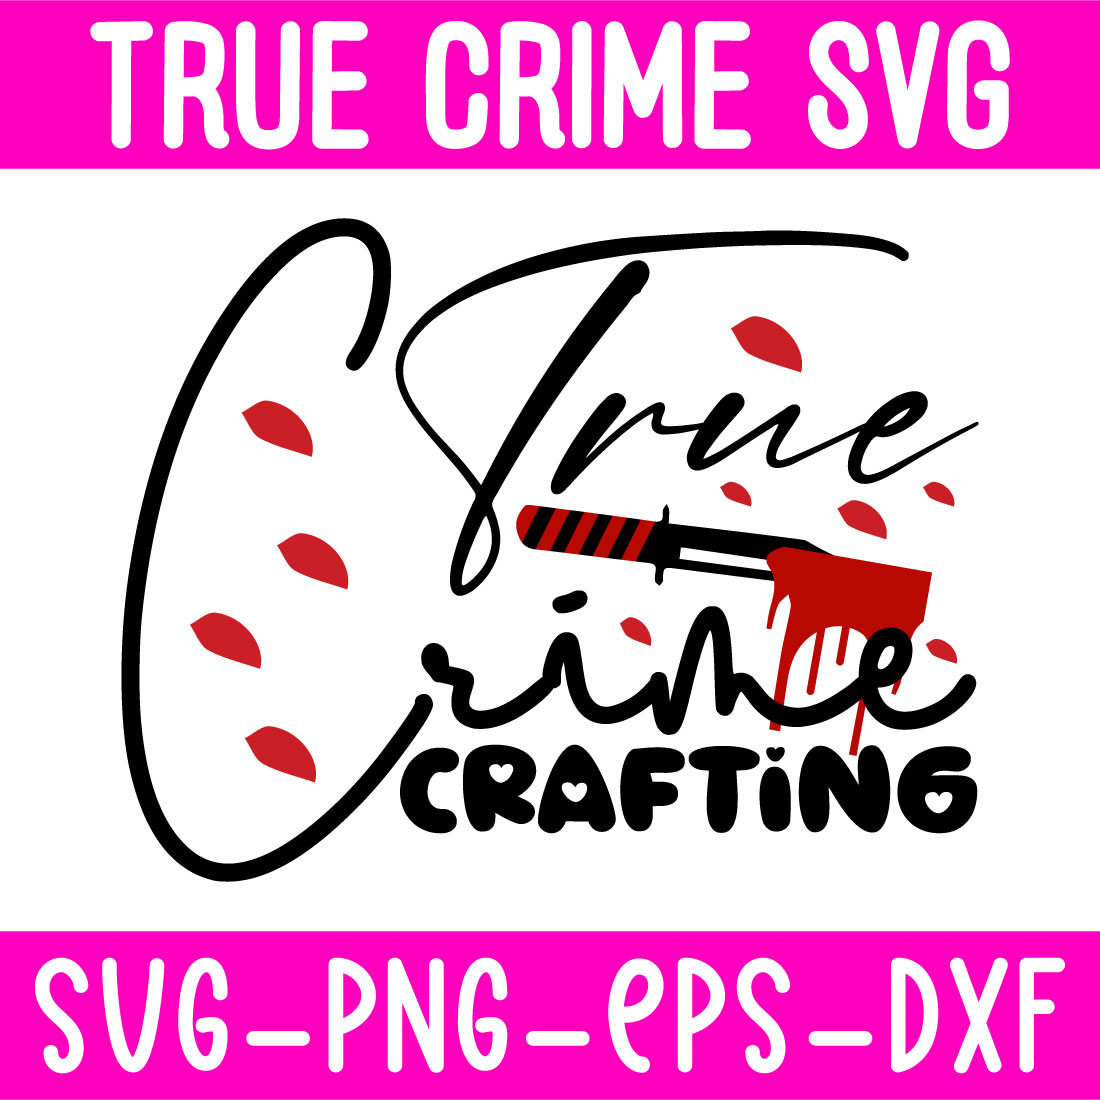 True-Crime Svg preview image.